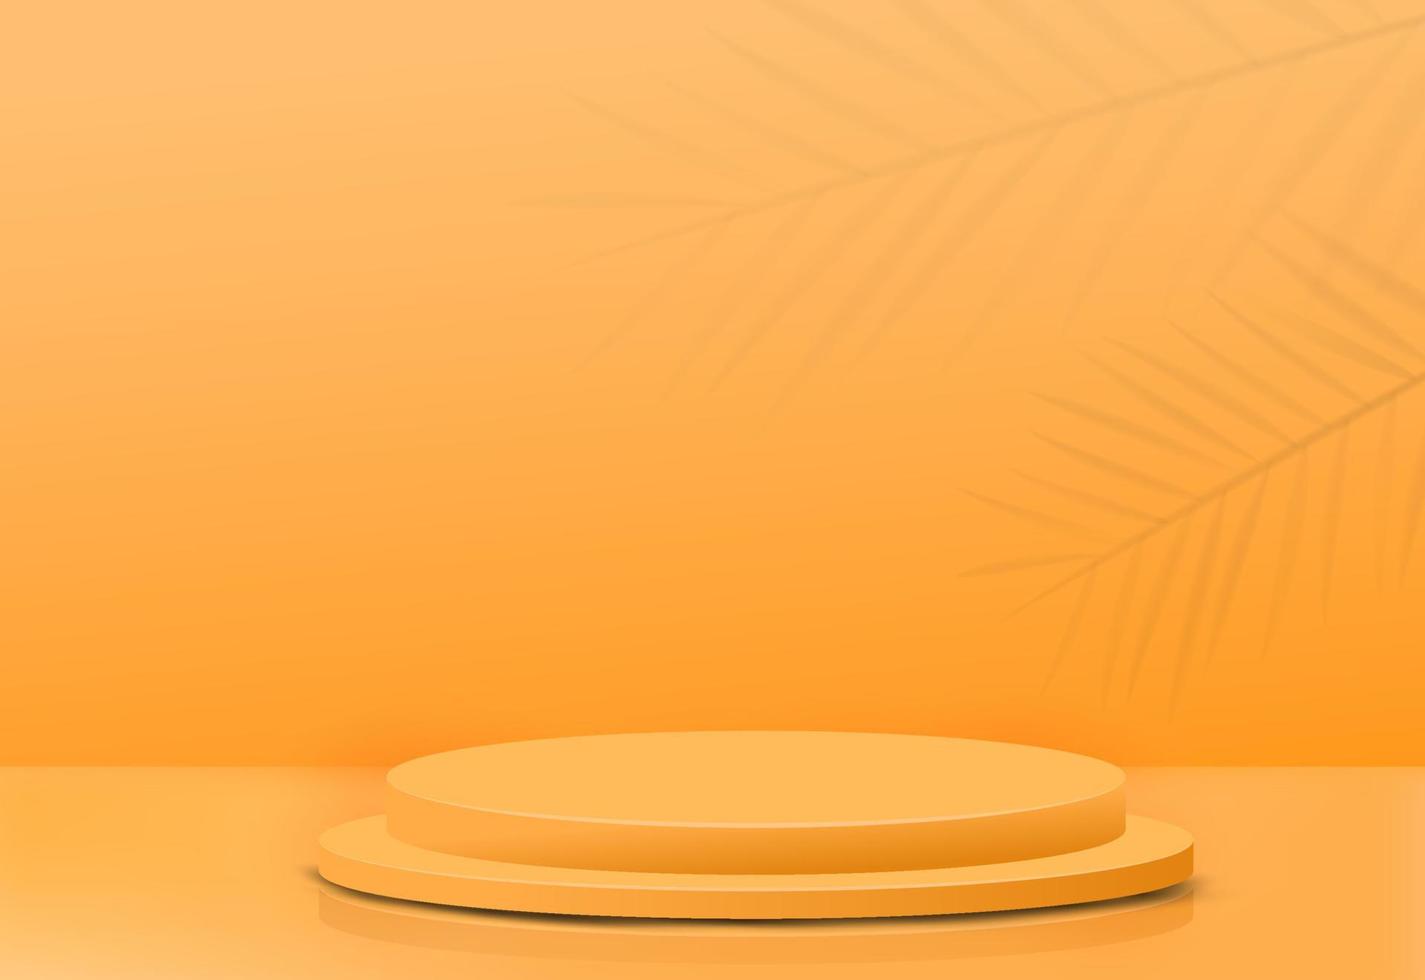 Premium podium circle shapes on orange background vector